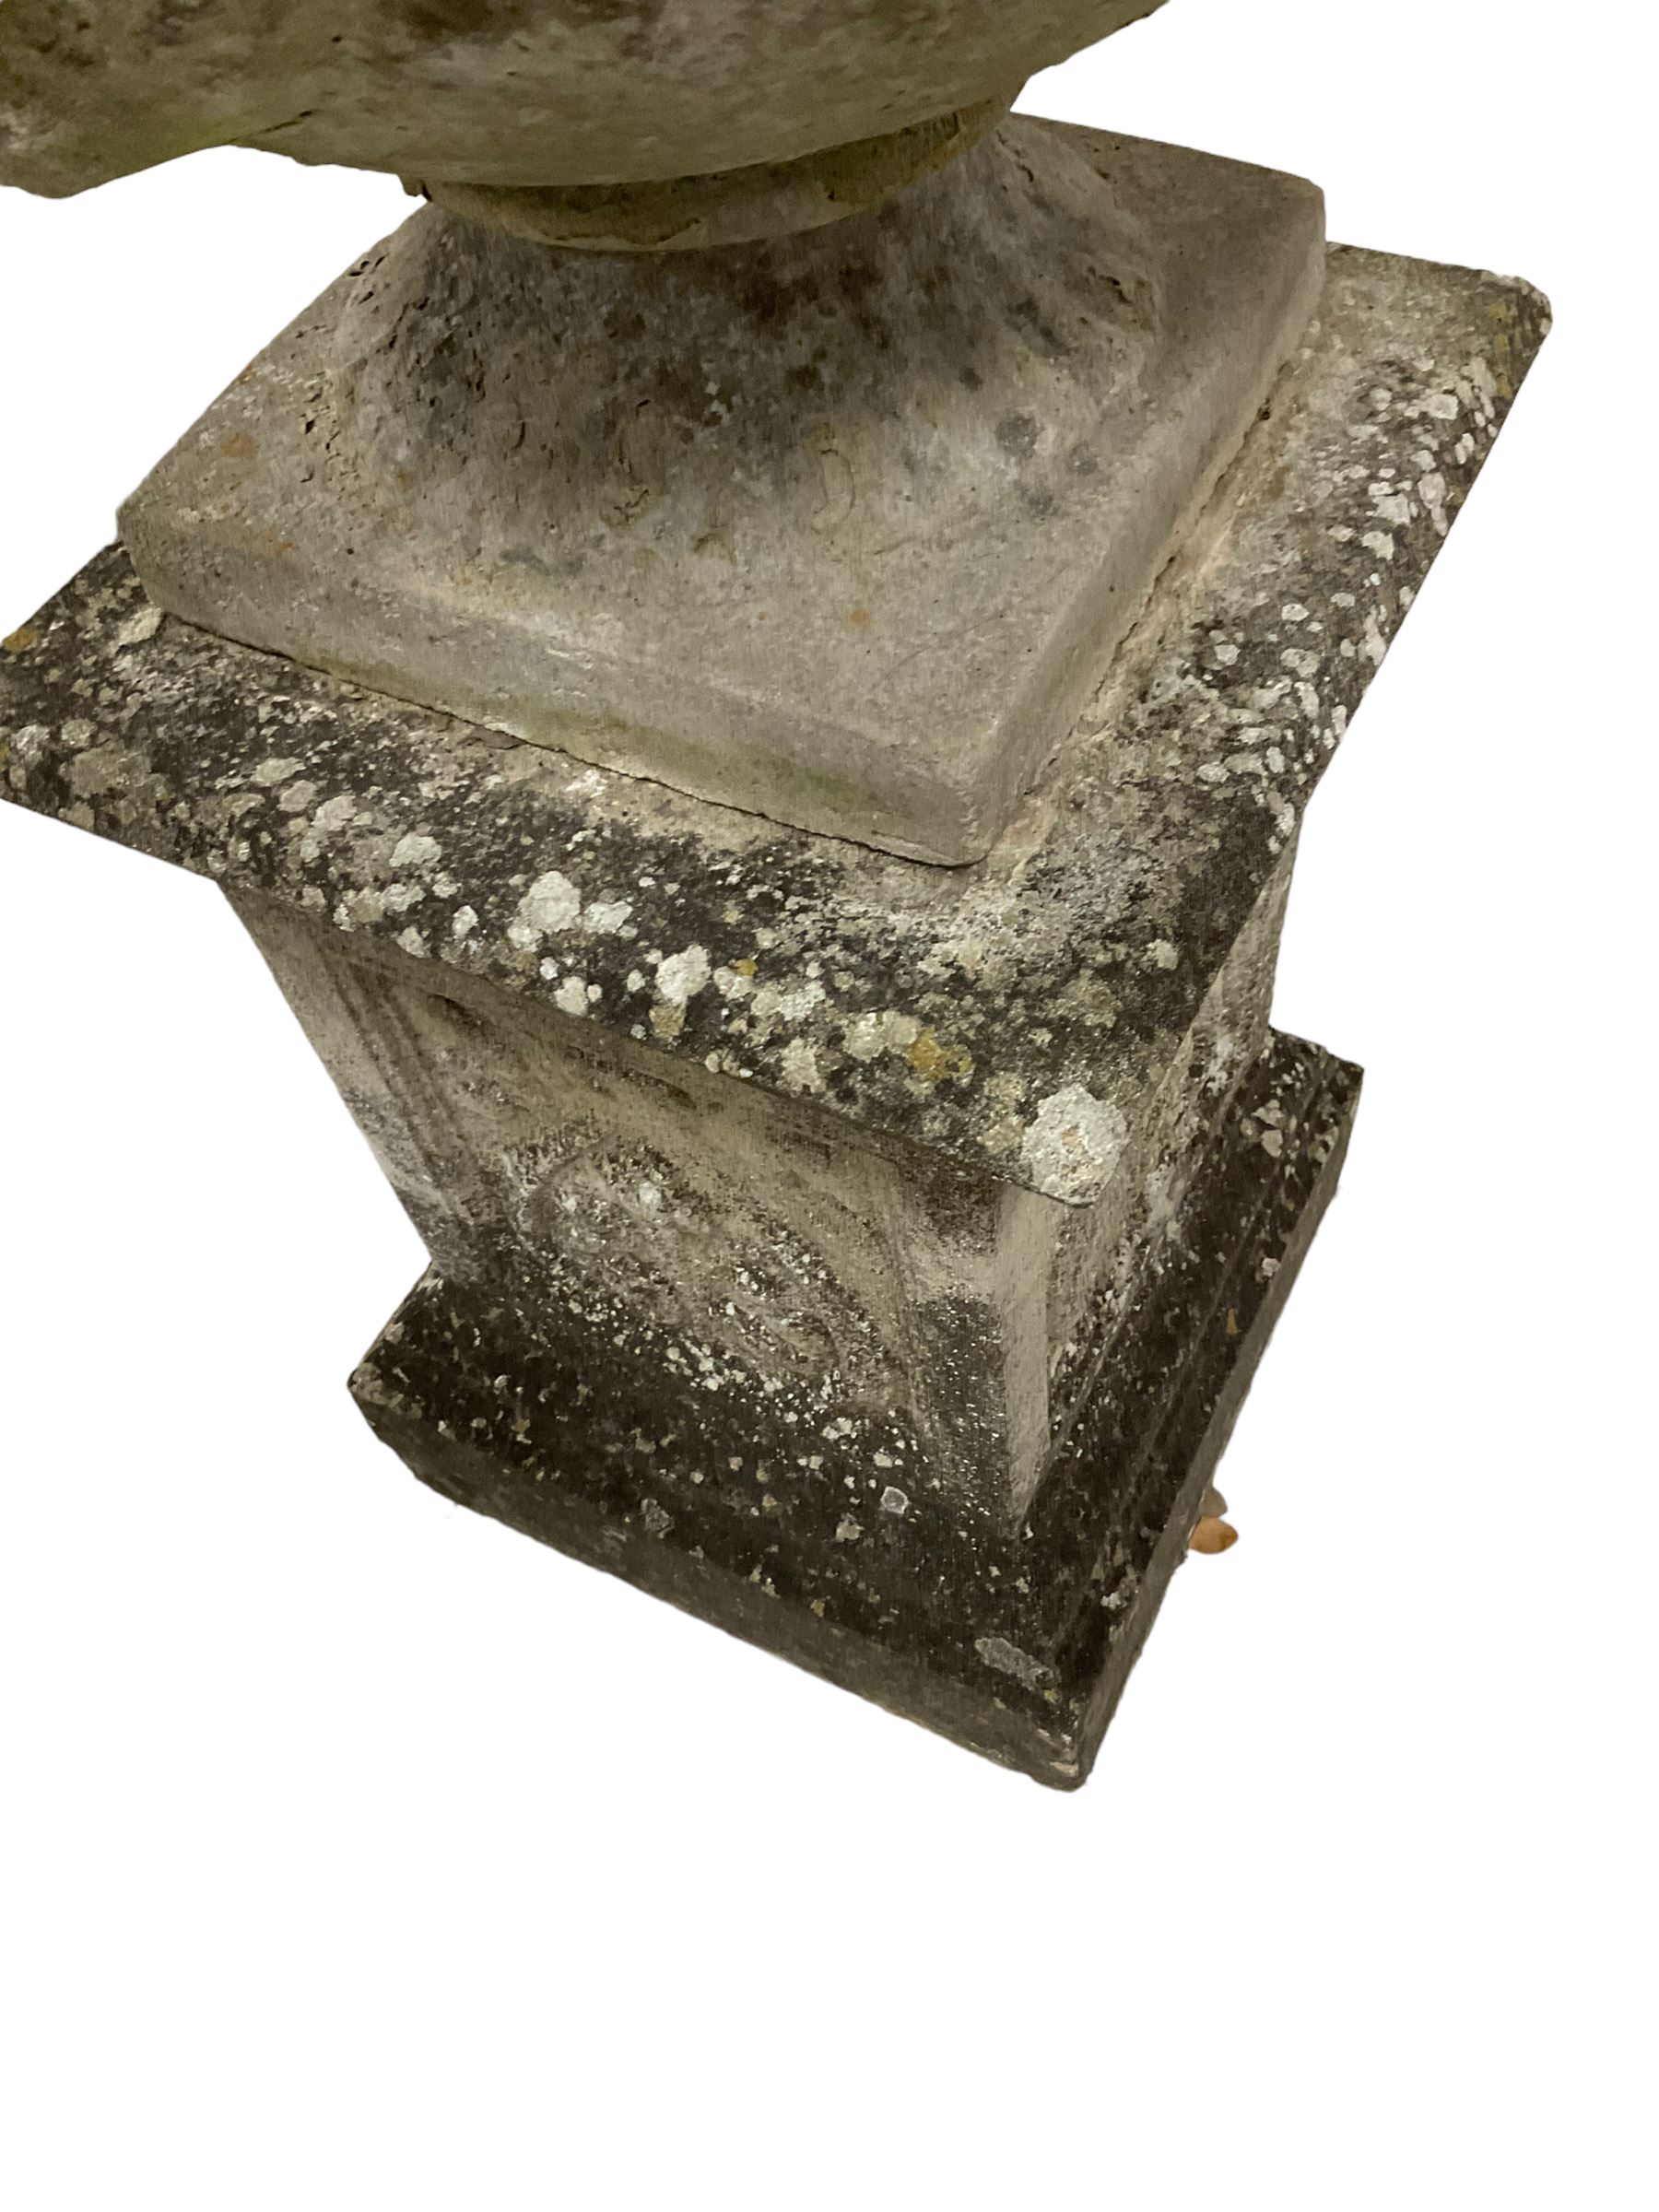 Reconstituted urn - Image 3 of 3